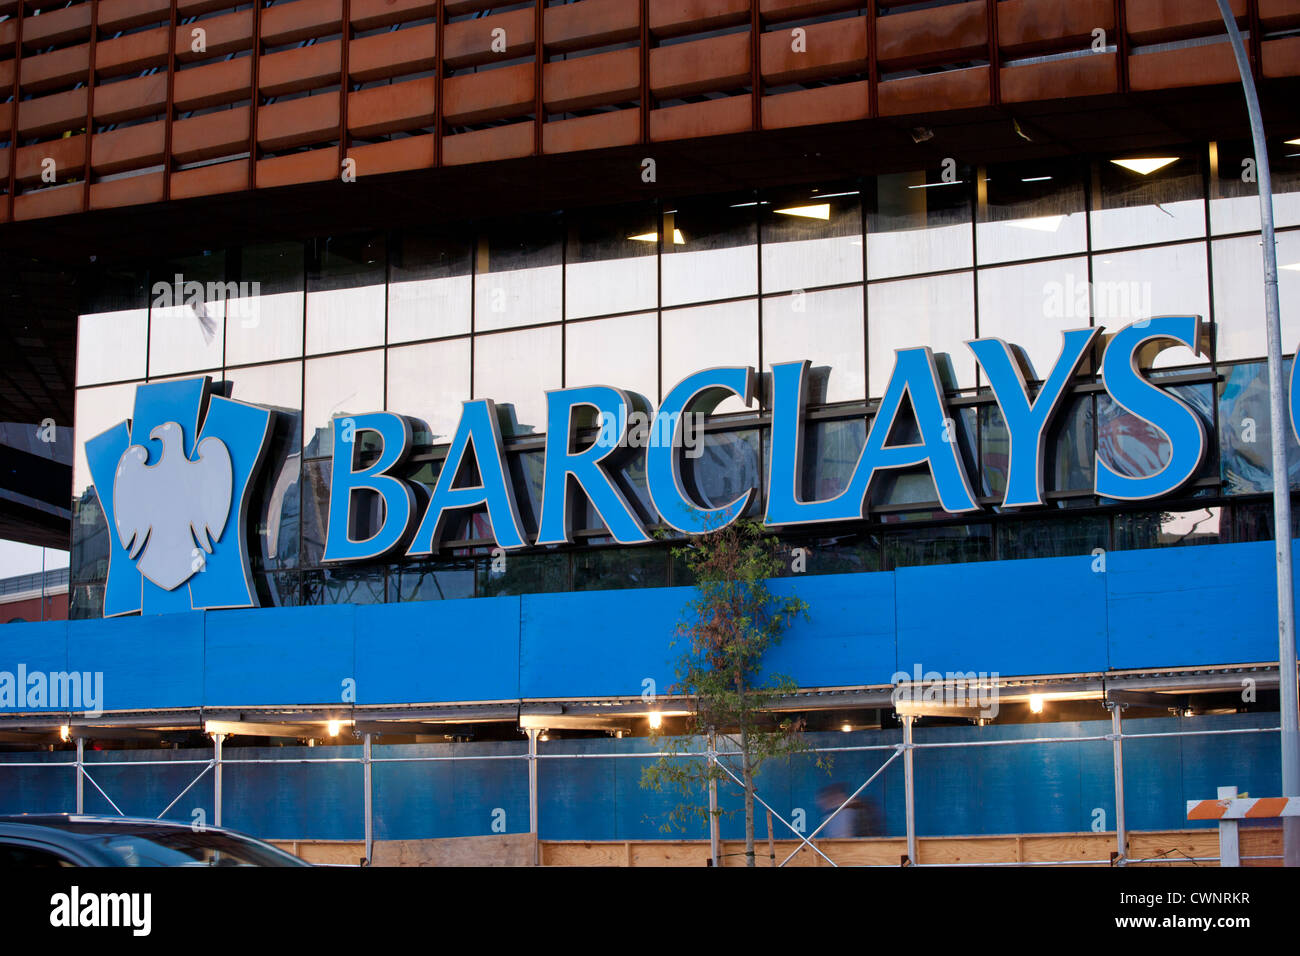 Le Barclays Center accueil du Brooklyn Nets Sports Arena et salle de Concert, Brooklyn, NY, USA Banque D'Images